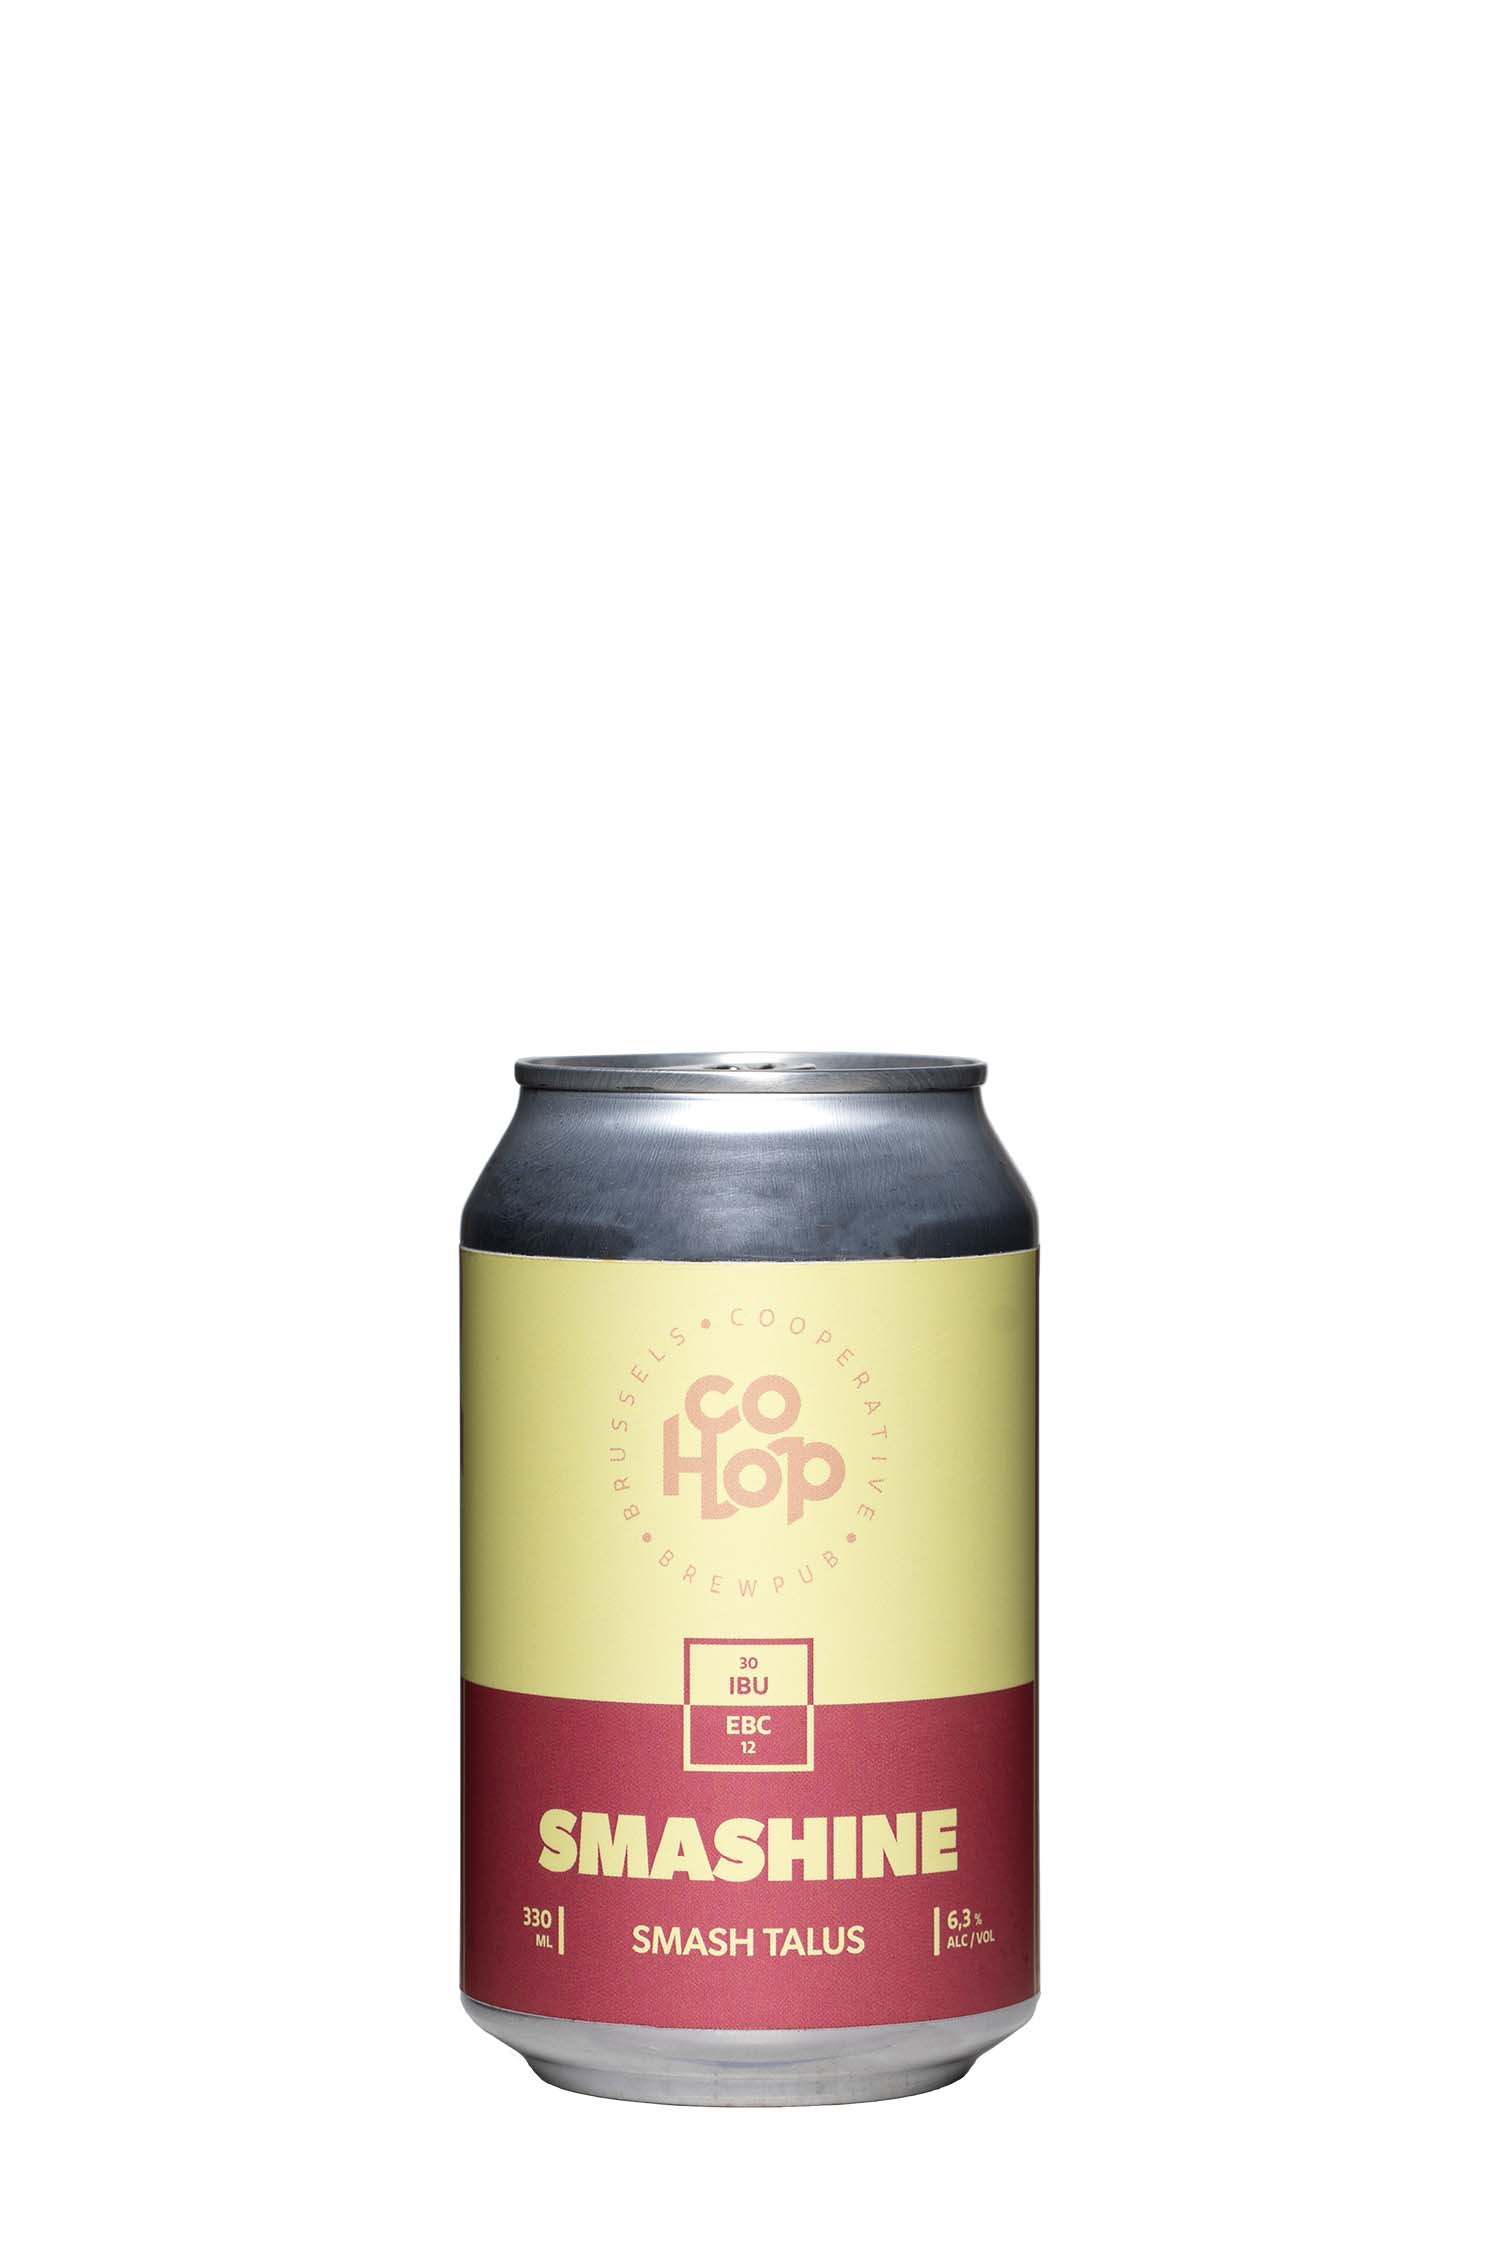 Smashine - CoHop-brouwerij 